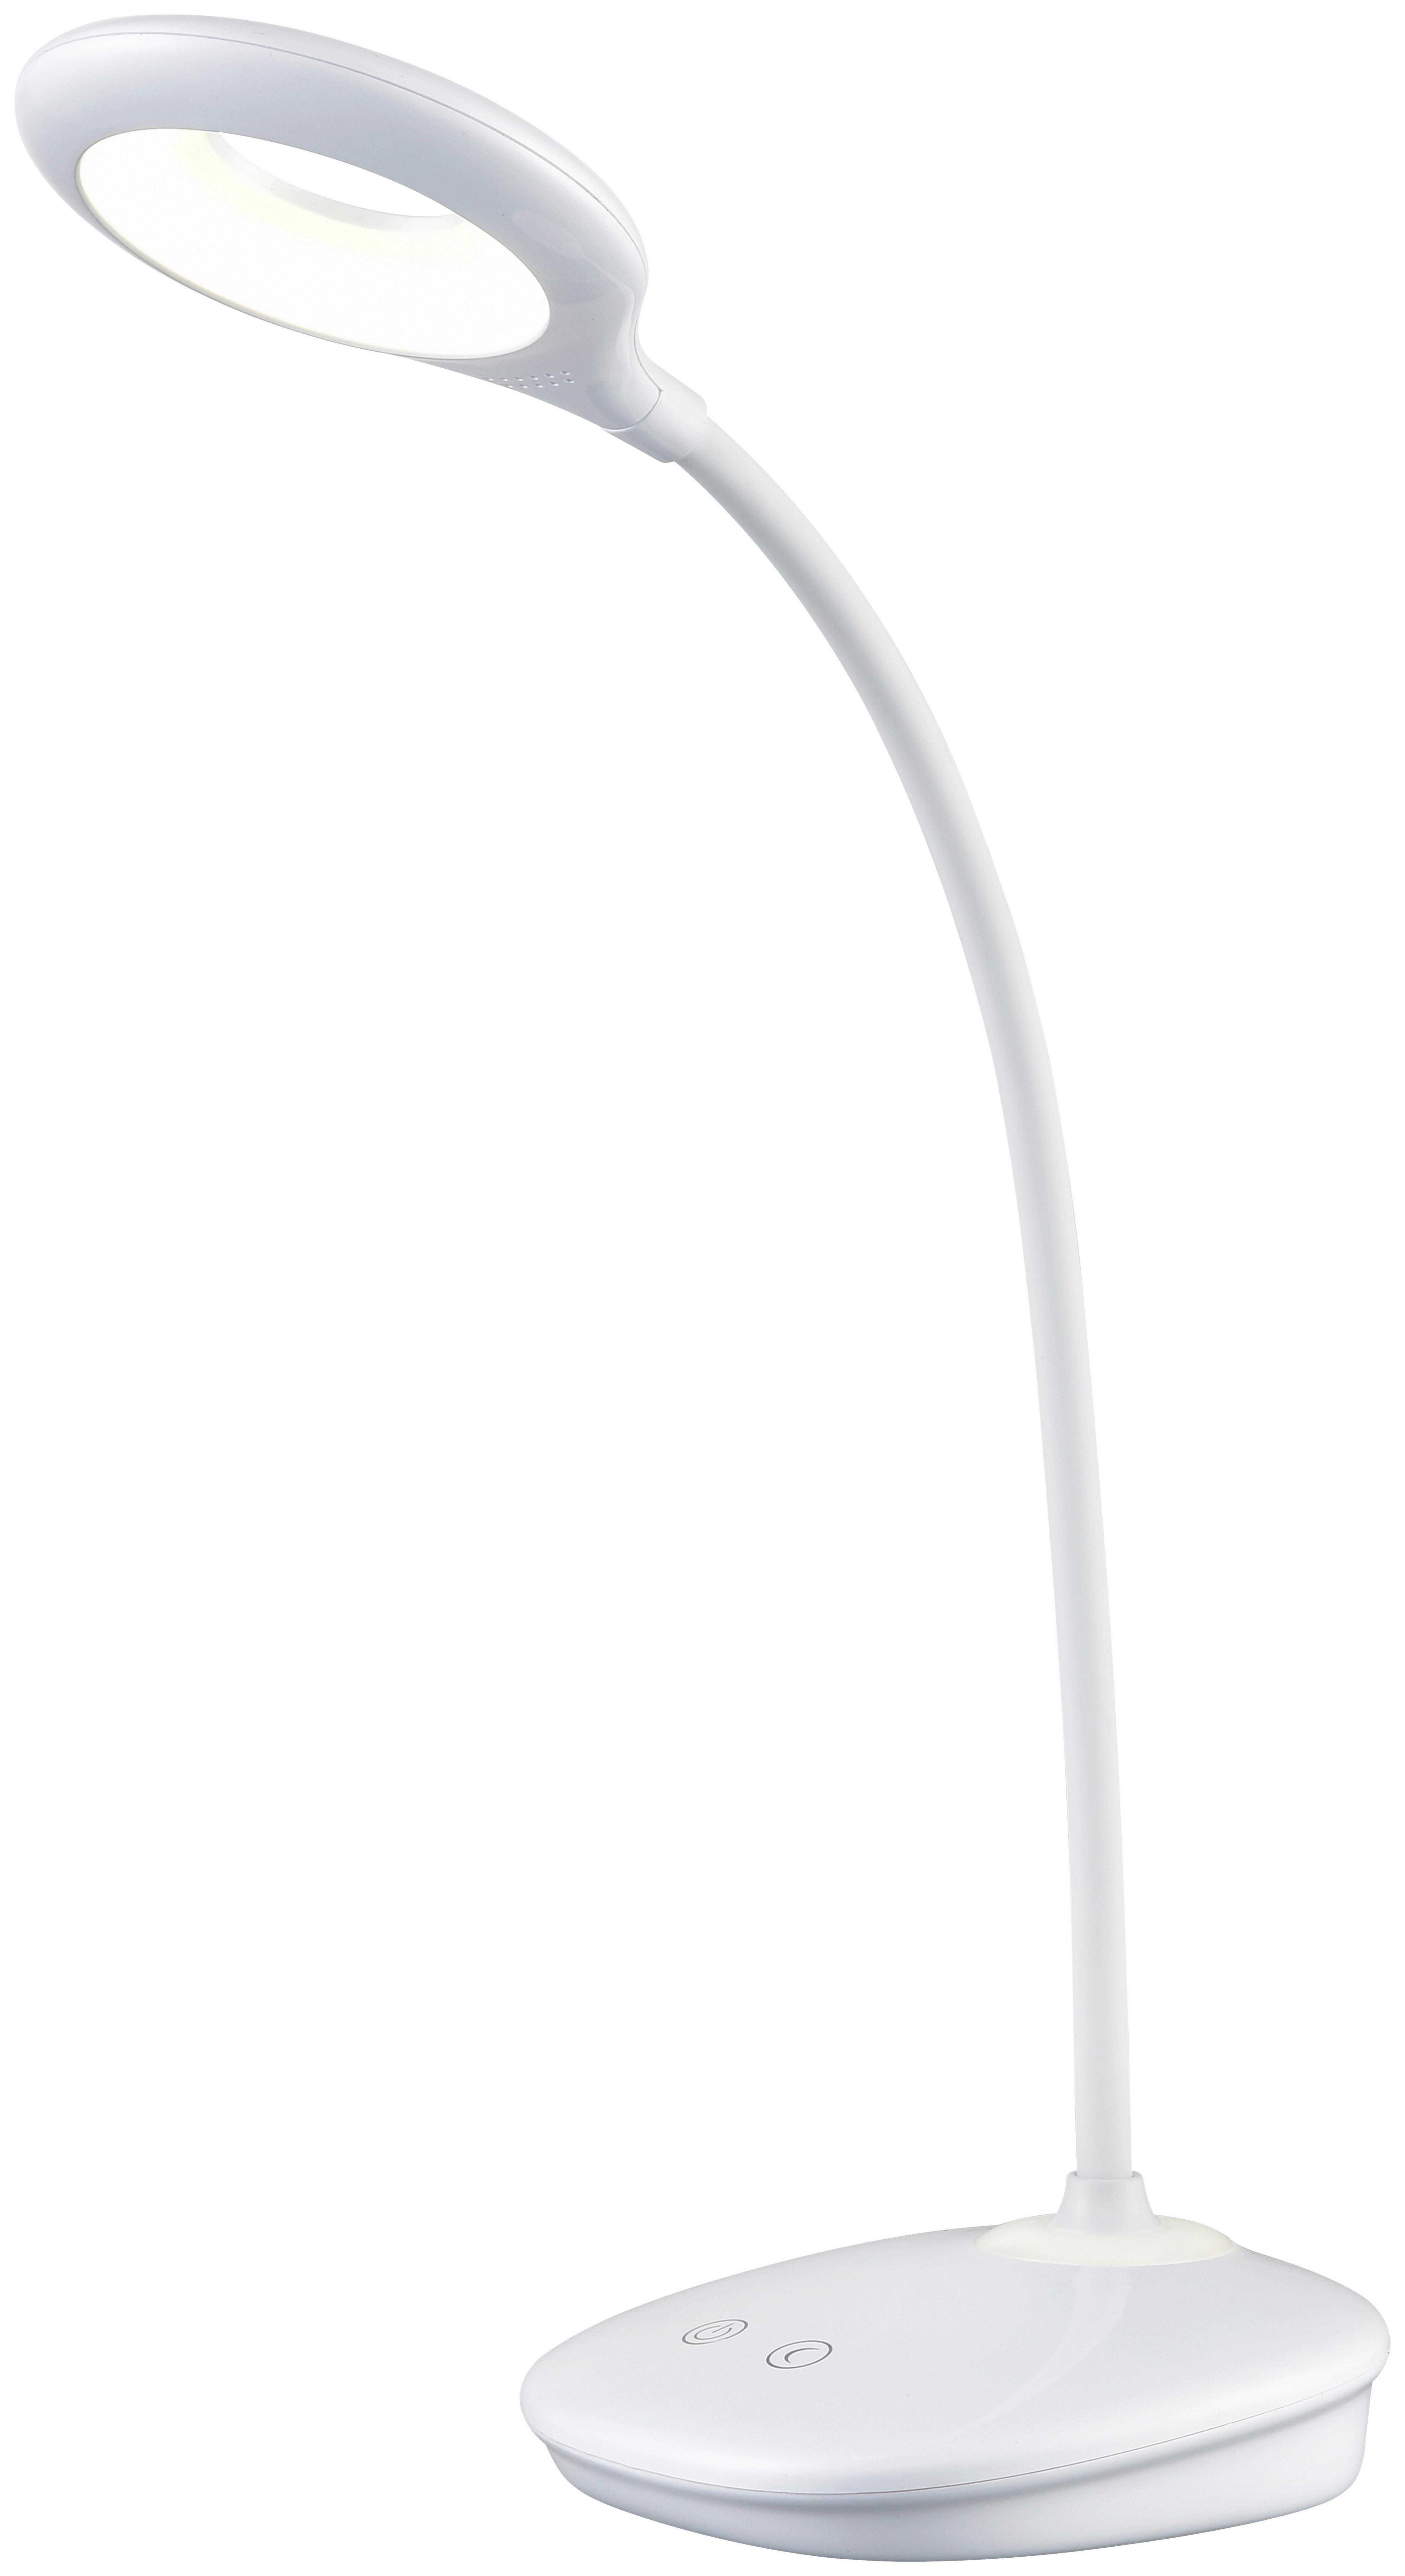 Íróasztali Lámpa Luli - Fehér, Lifestyle, Műanyag (12/43cm) - Based